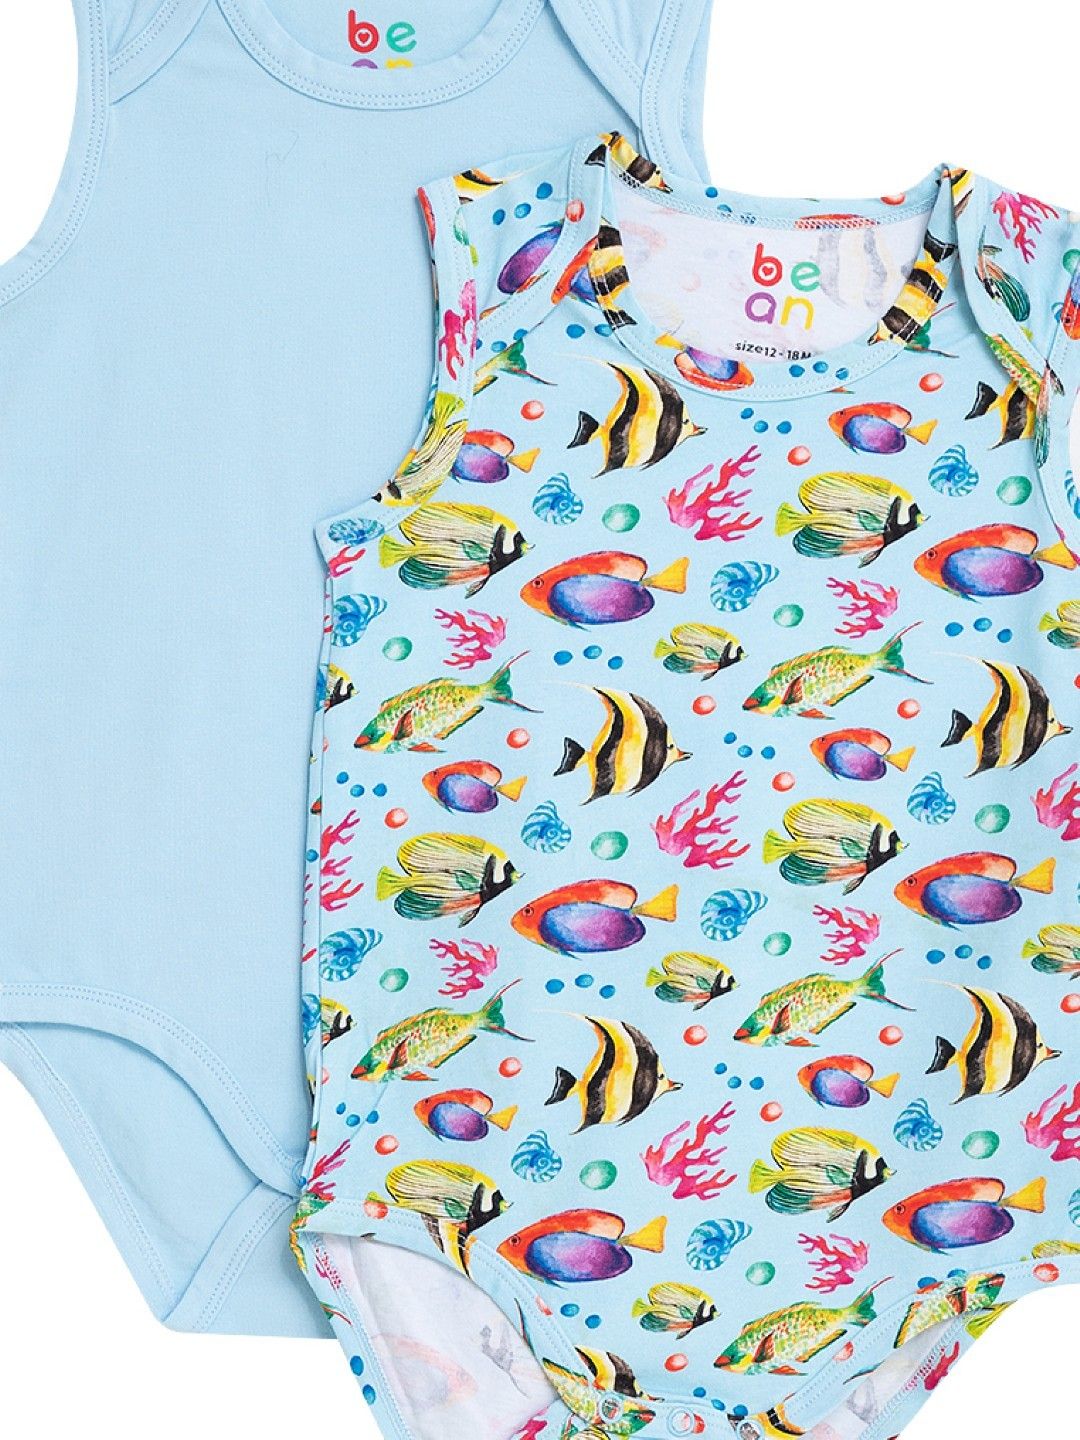 bean fashion Wonder Playsuits 2-Piece Anina Rubio Fish Nasugbu Sleeveless Onesie Set (Multicolor- Image 3)